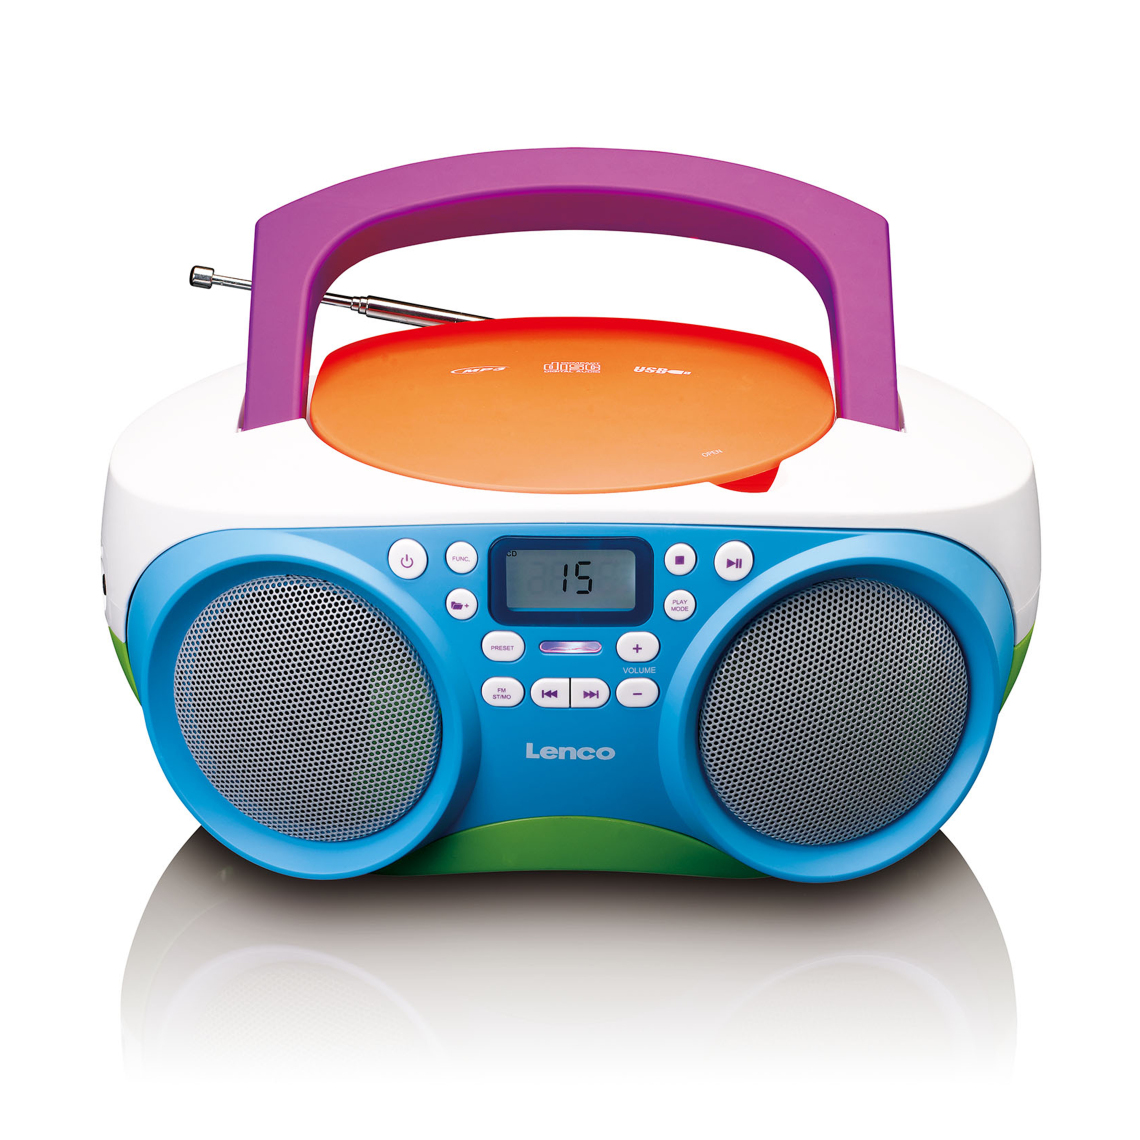 Lenco - Radio portable FM avec Lecteur CD/USB SCD-41 Multicolore - Radio